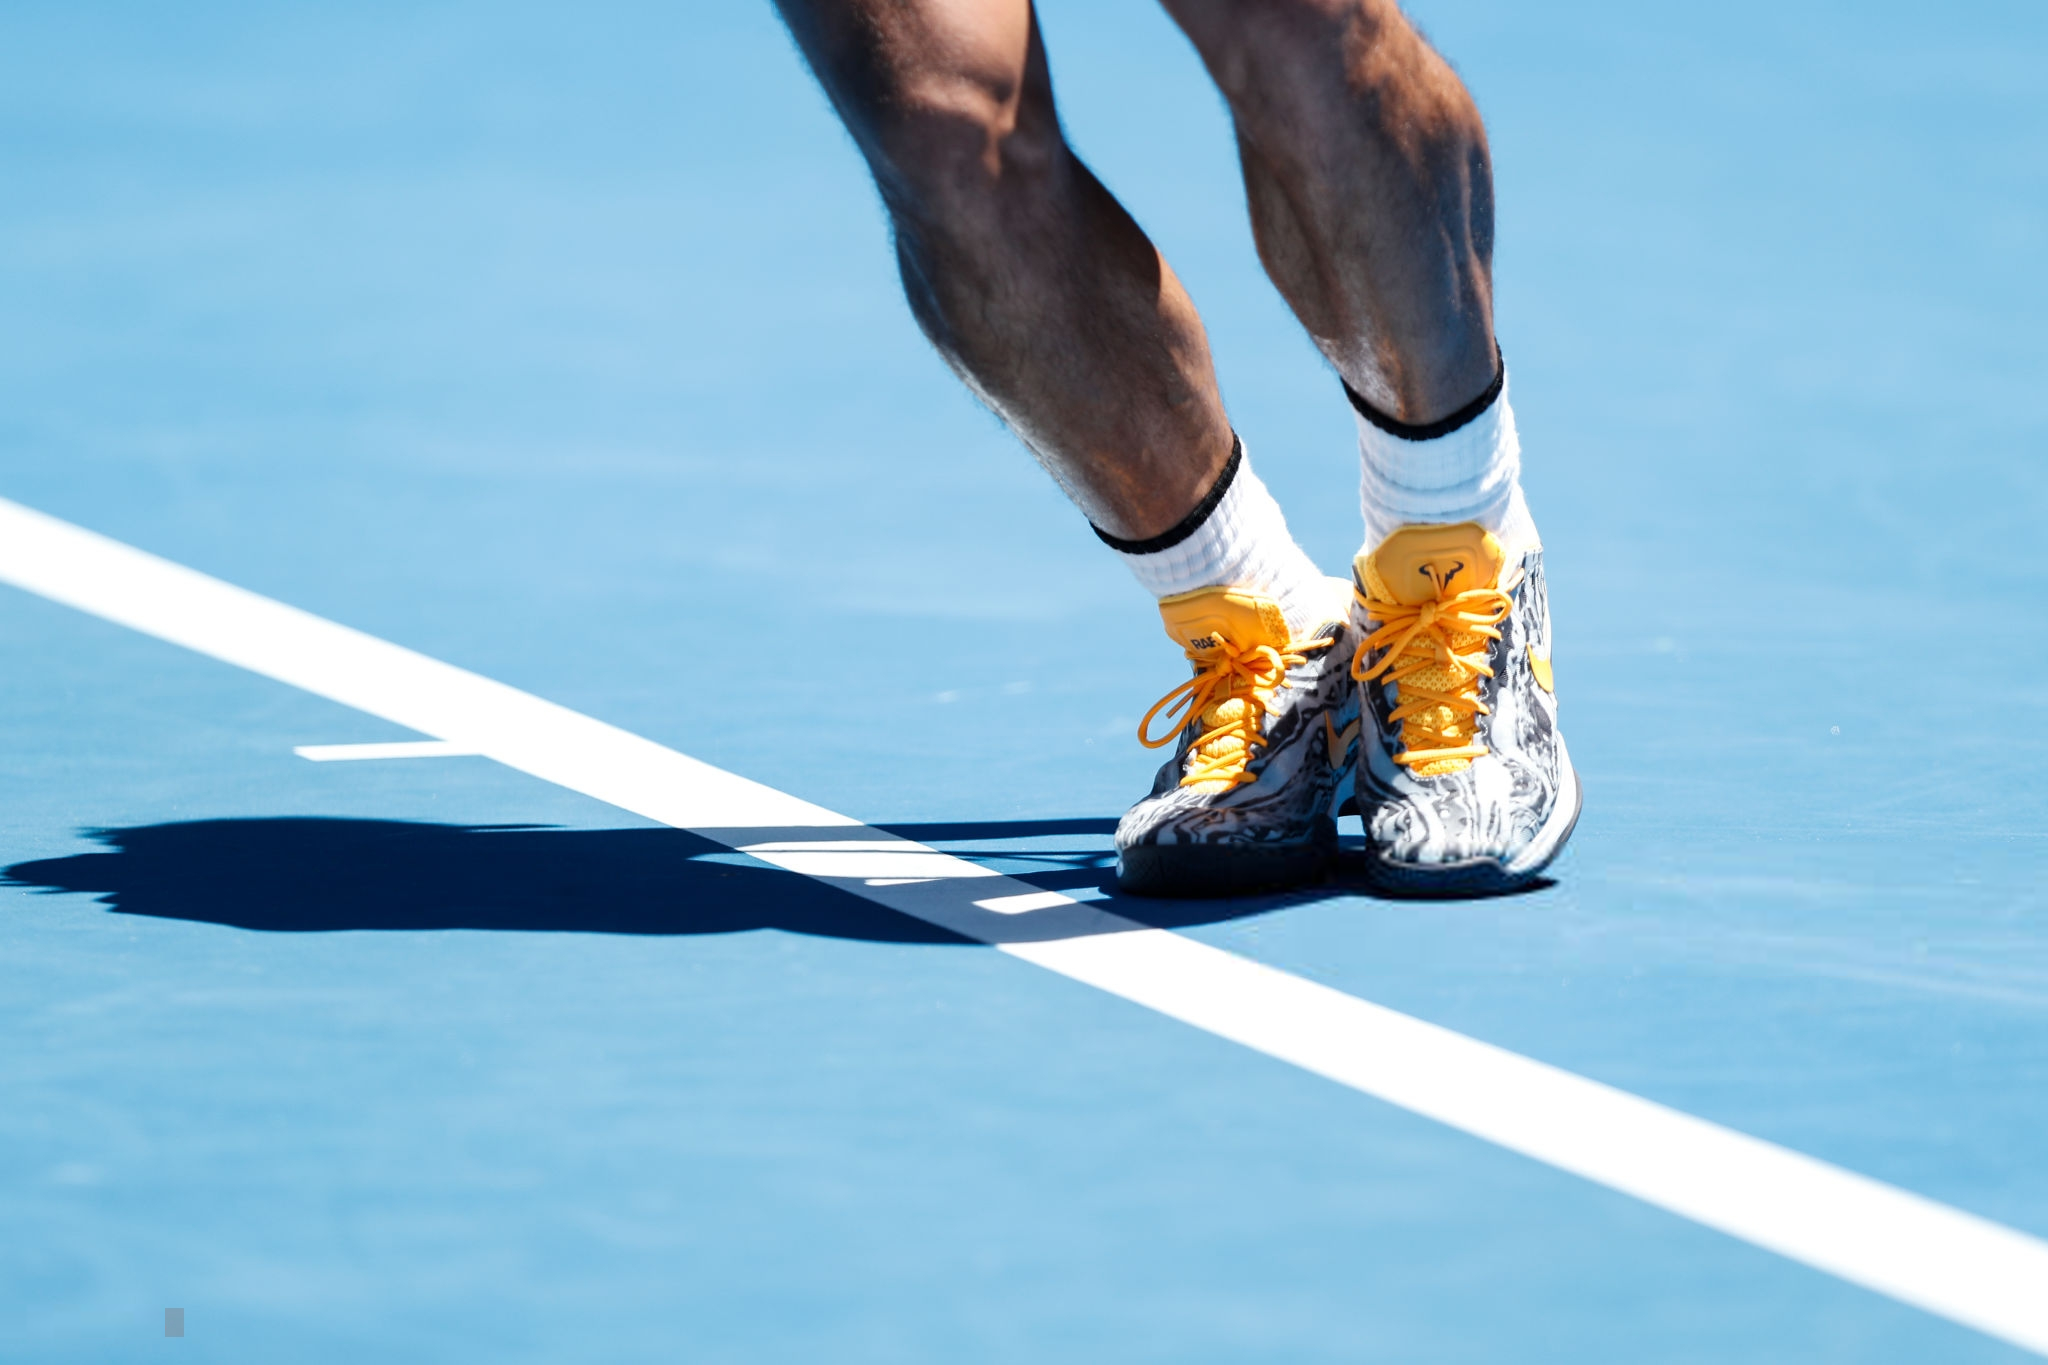 rafael nadal nike shoes 2019 australian open 2019 zapatos – Rafael Nadal  Fans